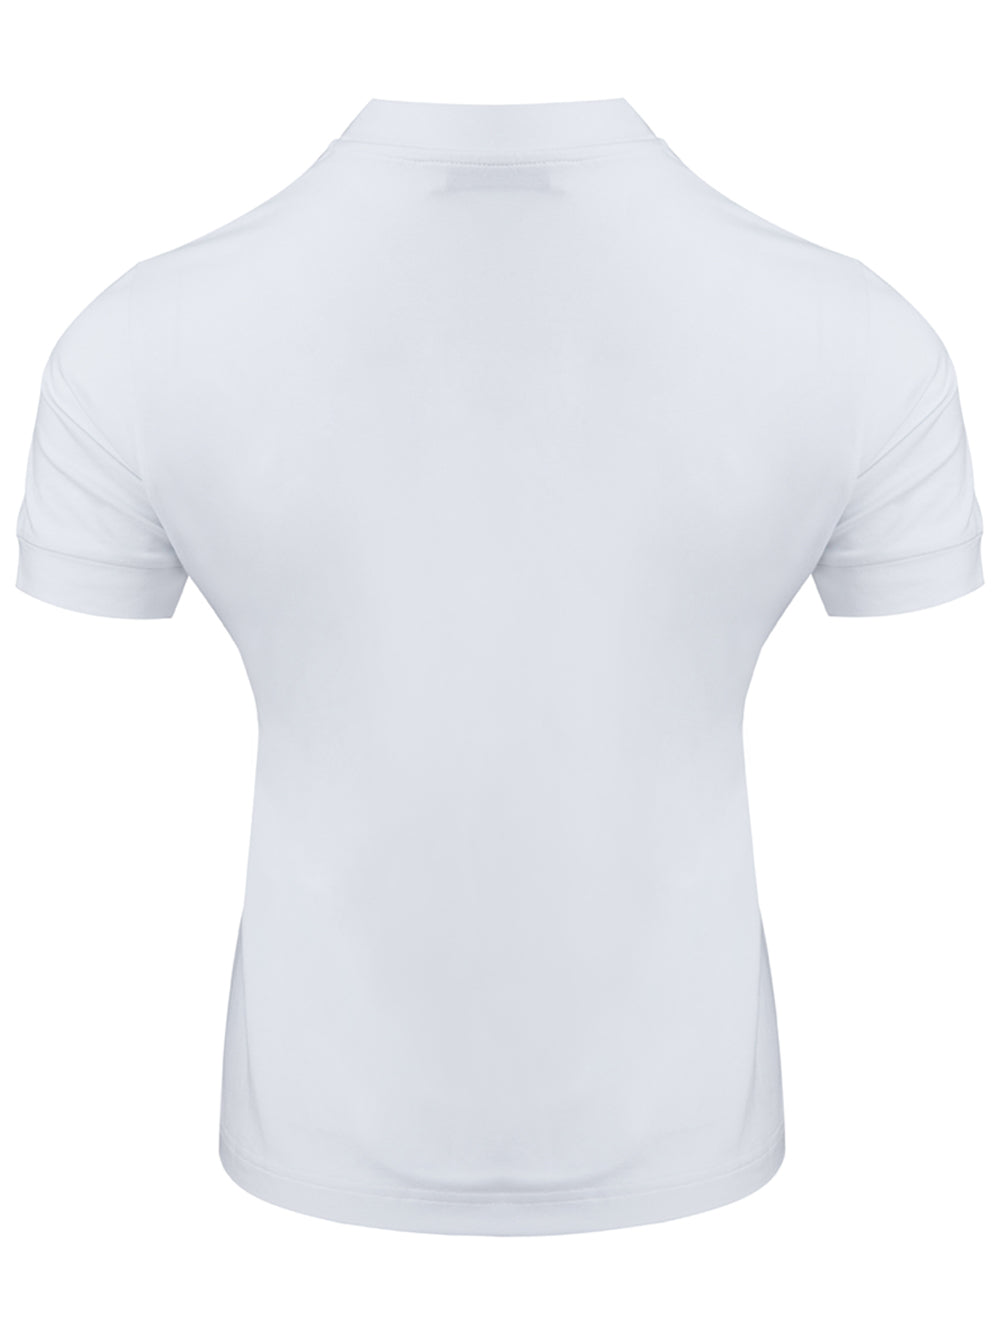 Balenciaga White Viscose T-Shirt with Black Logo